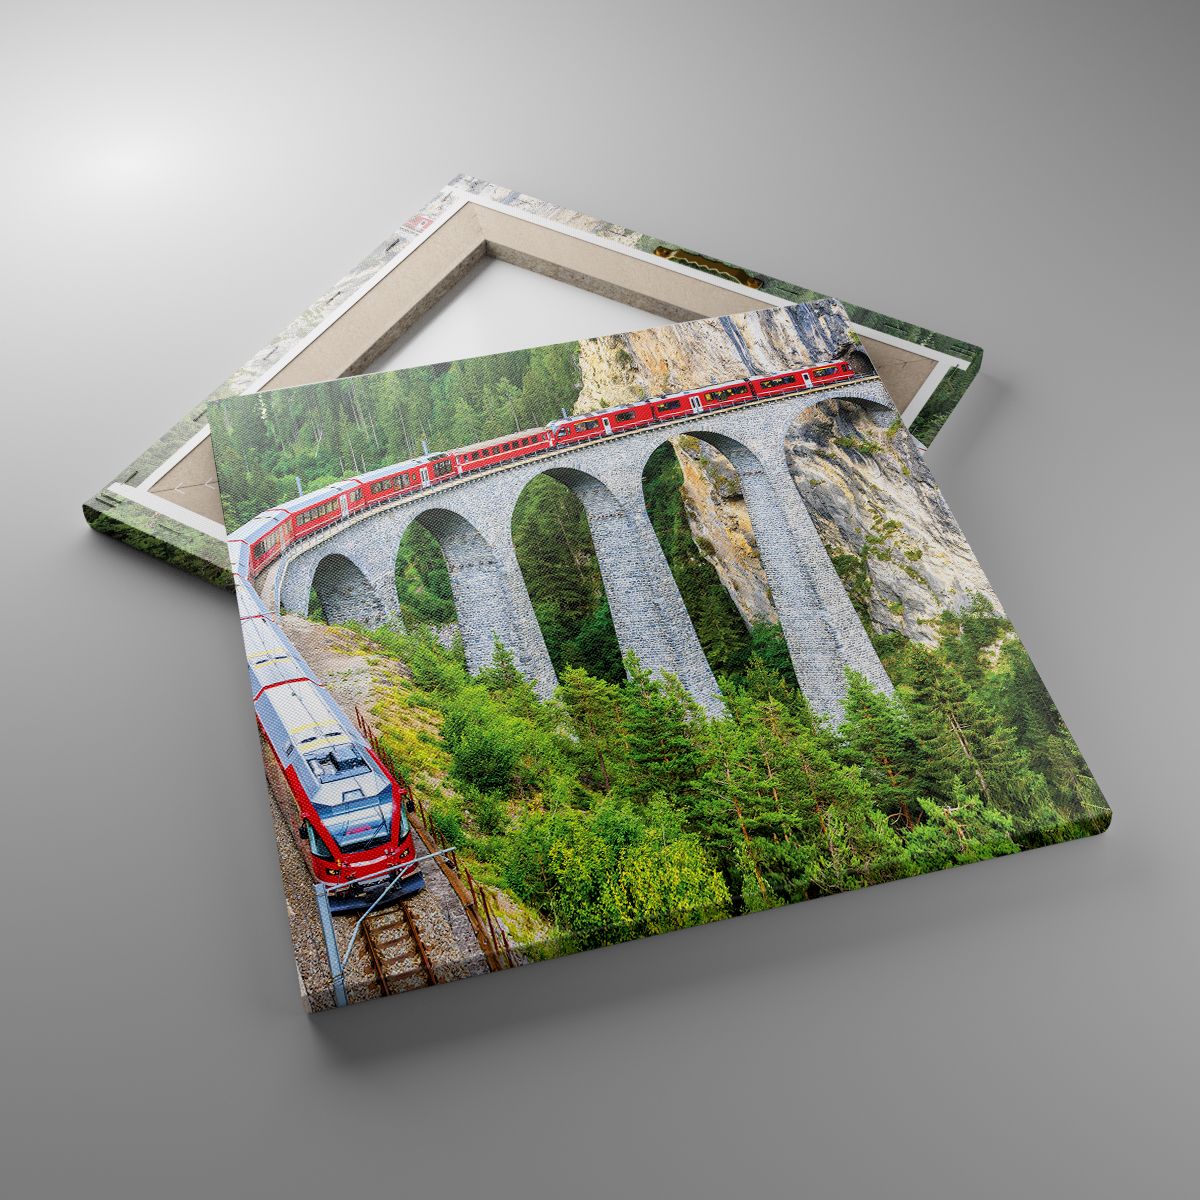 Obrazy Most Kolejowy, Obrazy Krajobraz Górski, Obrazy Pociąg Pasażerski, Obrazy Góry, Obrazy Alpy